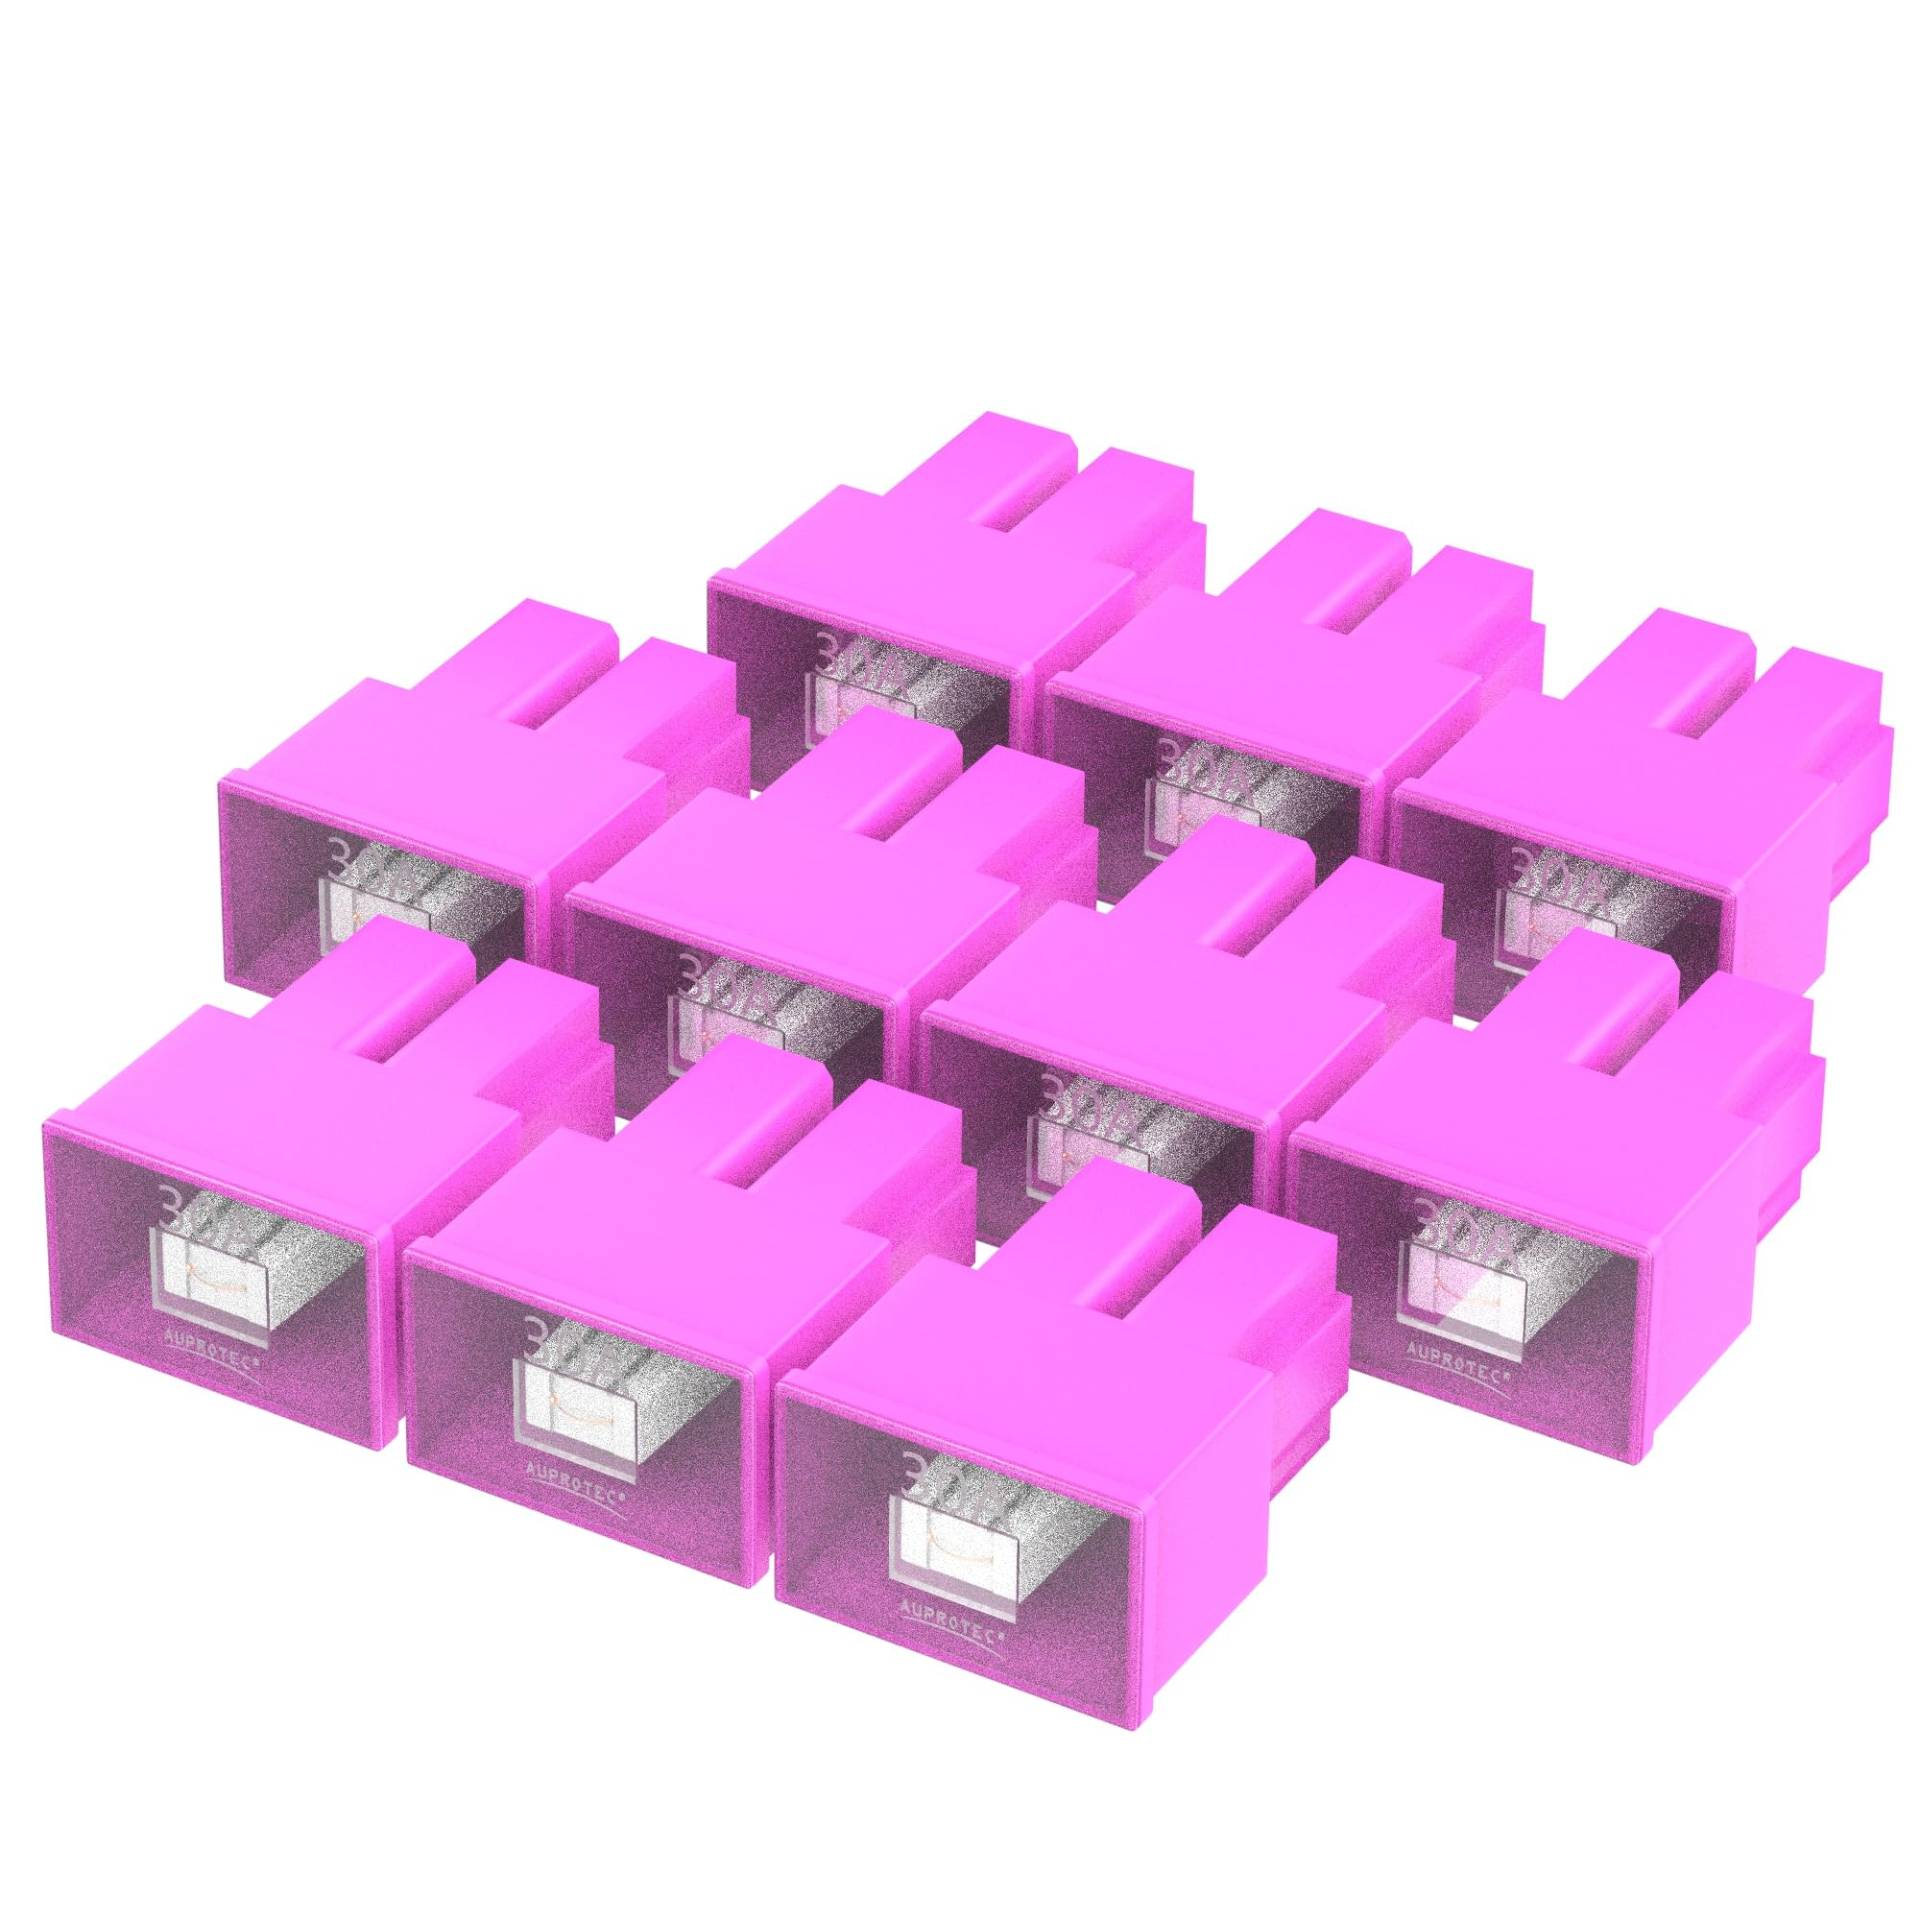 AUPROTEC PAL AS Blocksicherung Female OTO AS Japan 20A - 60A Auswahl: 30A Ampere pink, 10 Stück von AUPROTEC